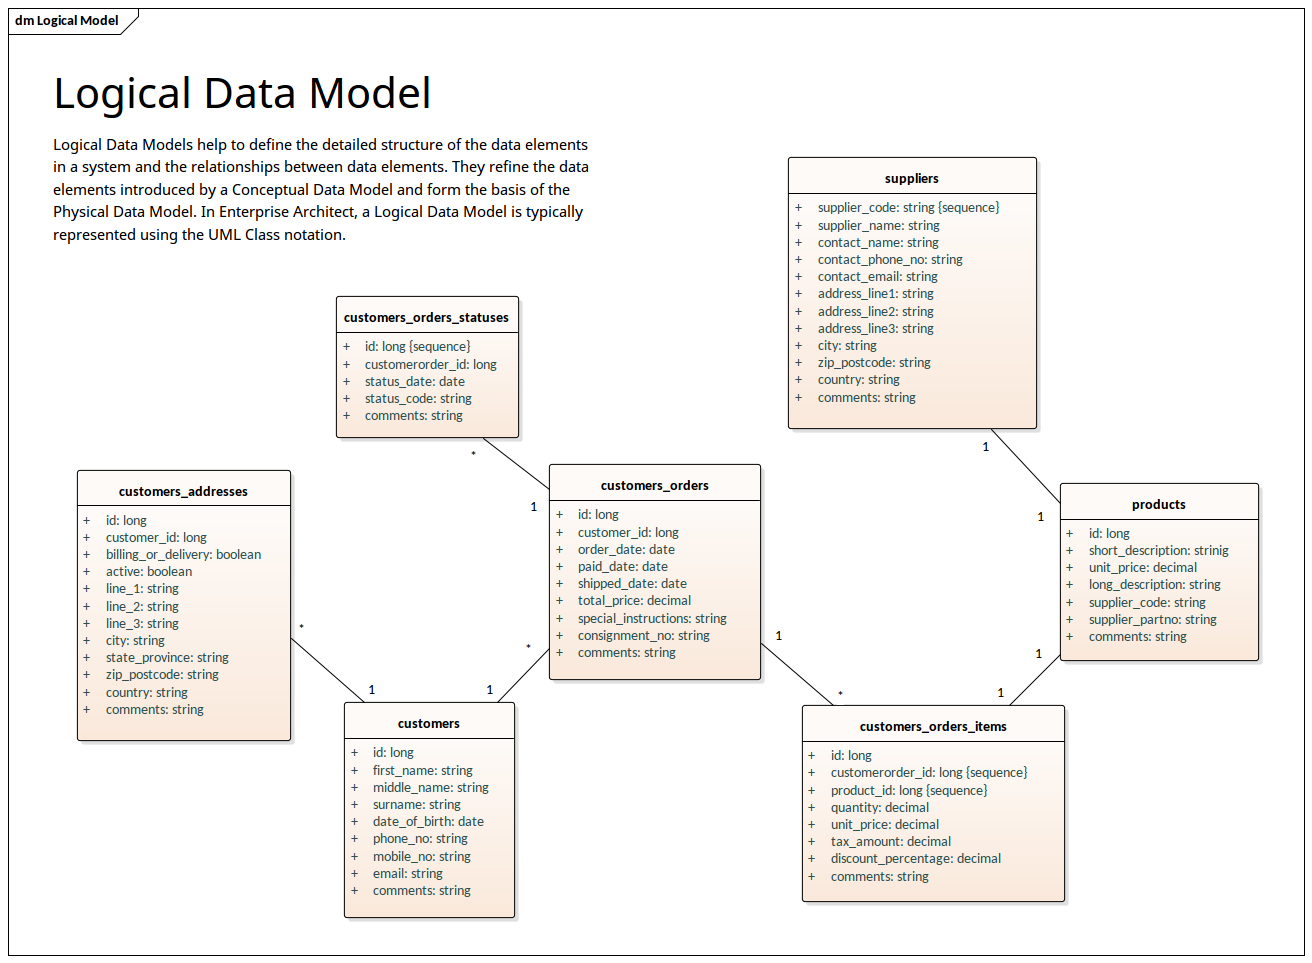 Logical Data Model - UML Notation | Enterprise Architect ...